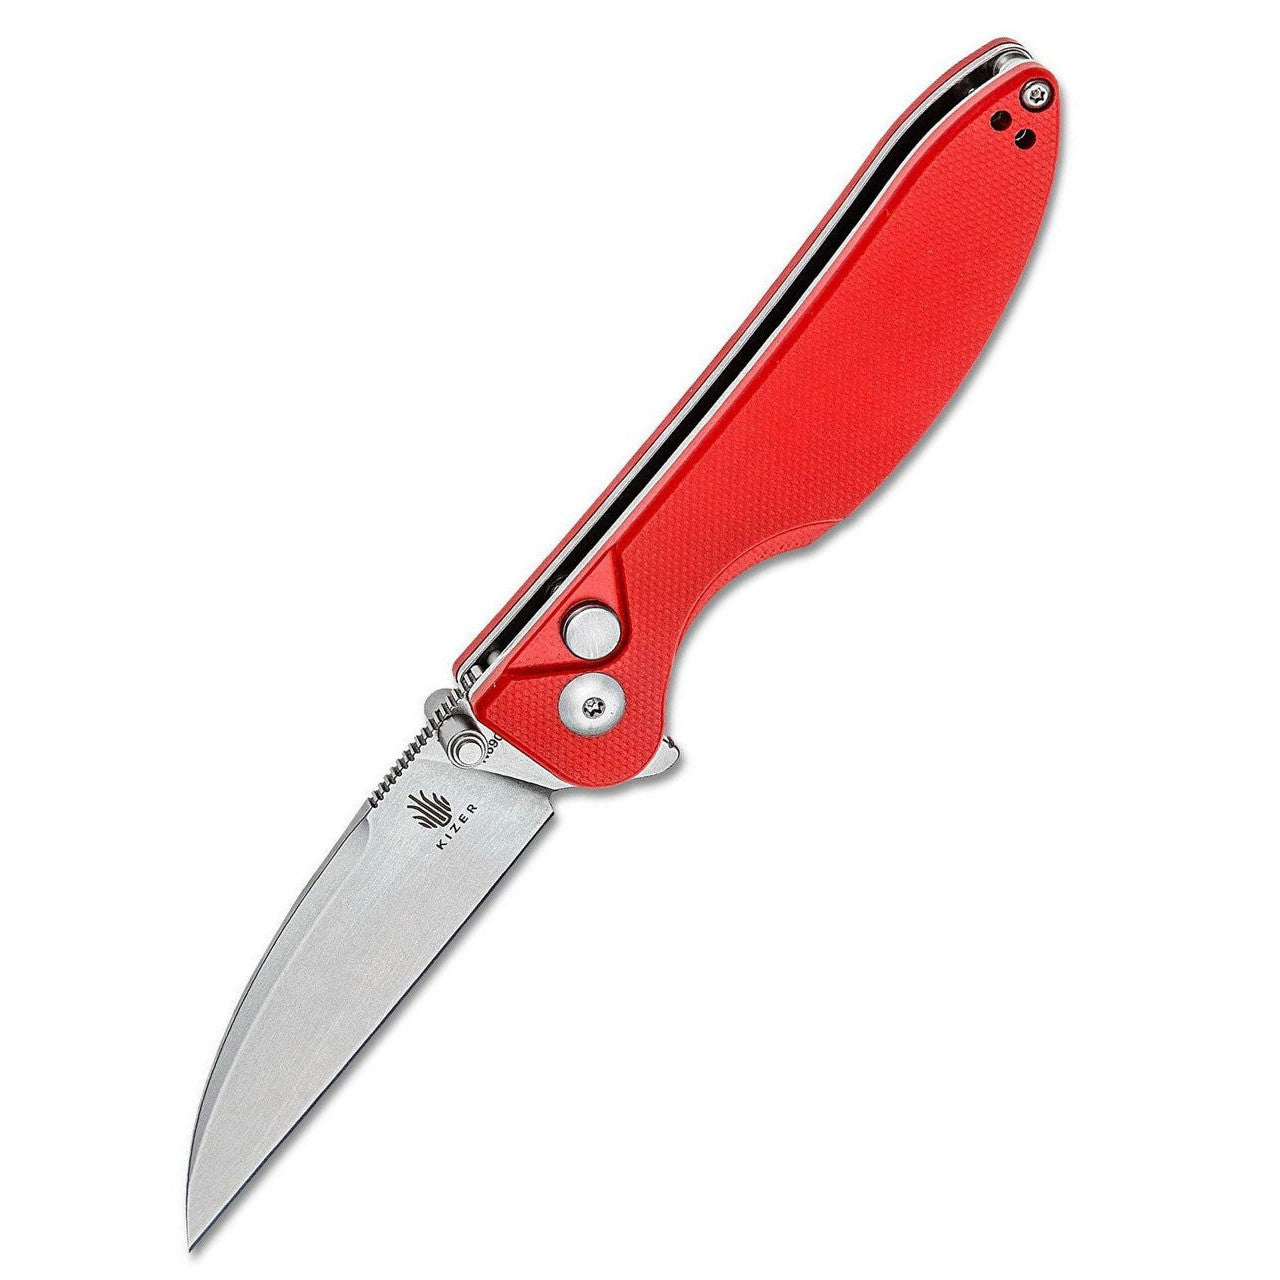 Vanguard Swayback red-Kizer Cutlery-OnlyKnives